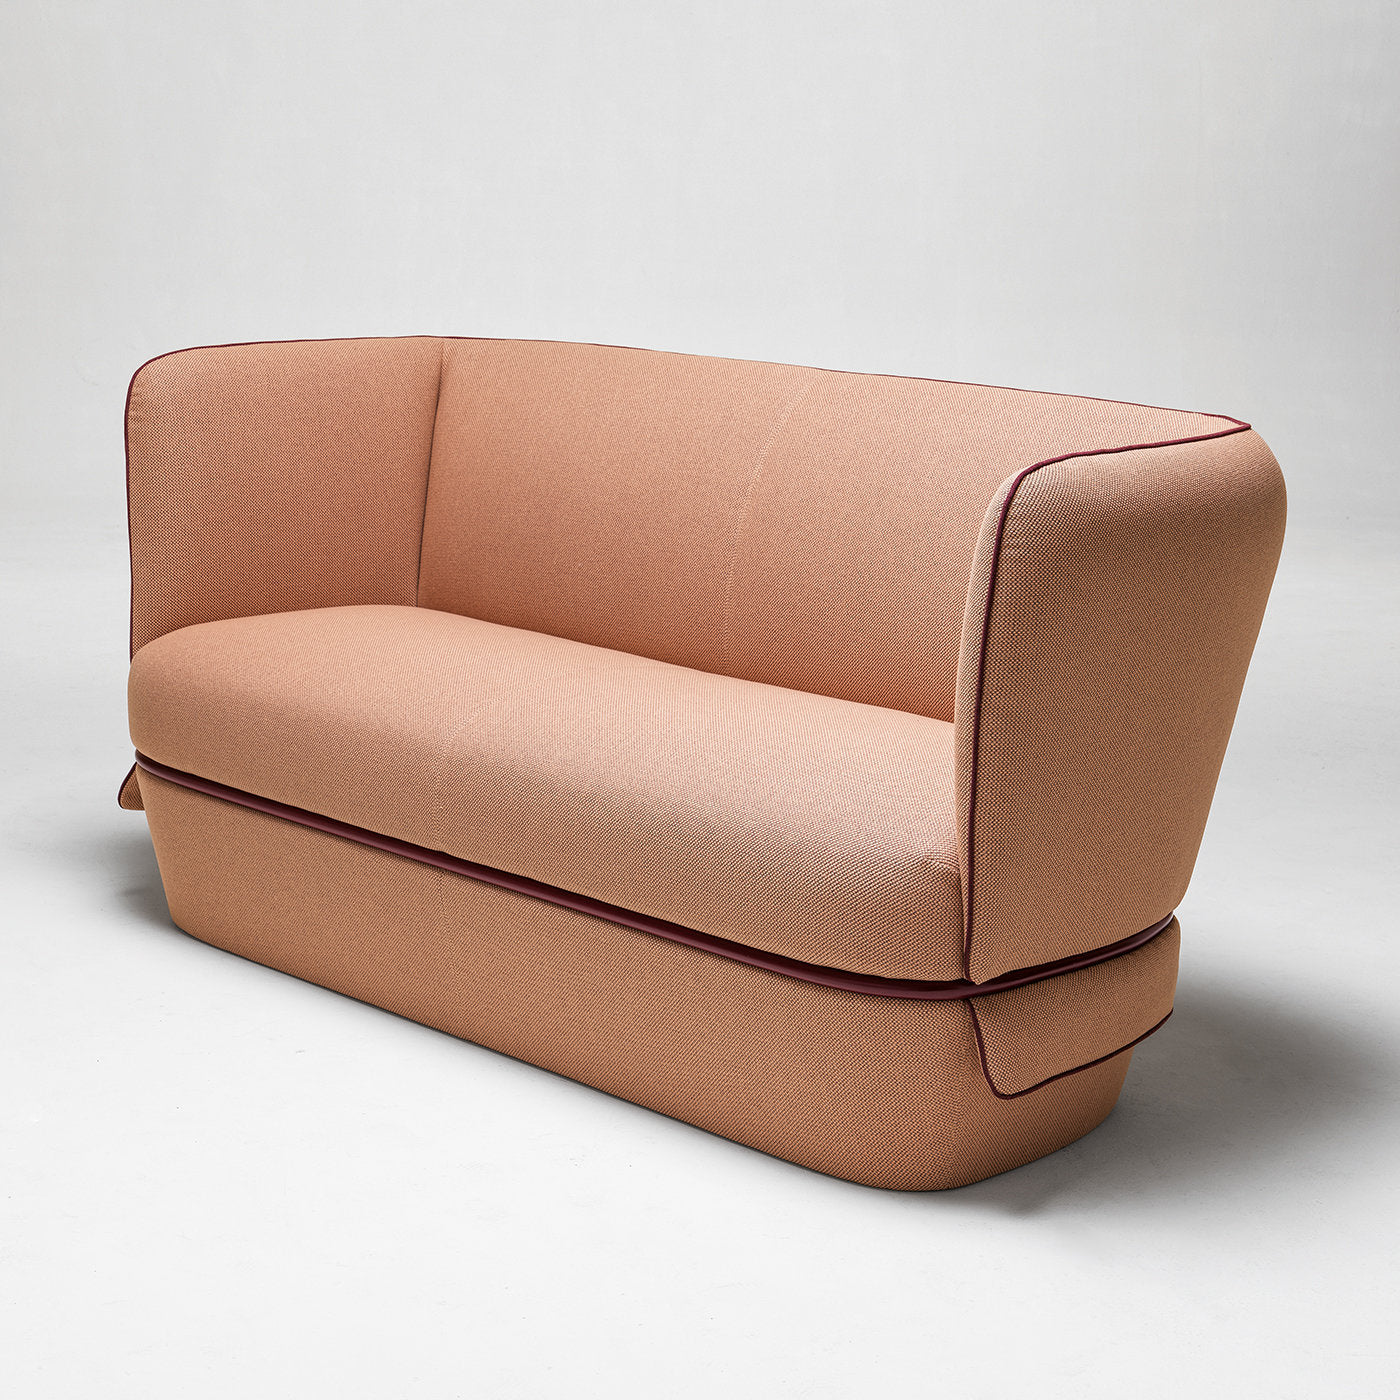 Chemise Apricot Pink Sofa by Studio Li-Do - Alternative view 1